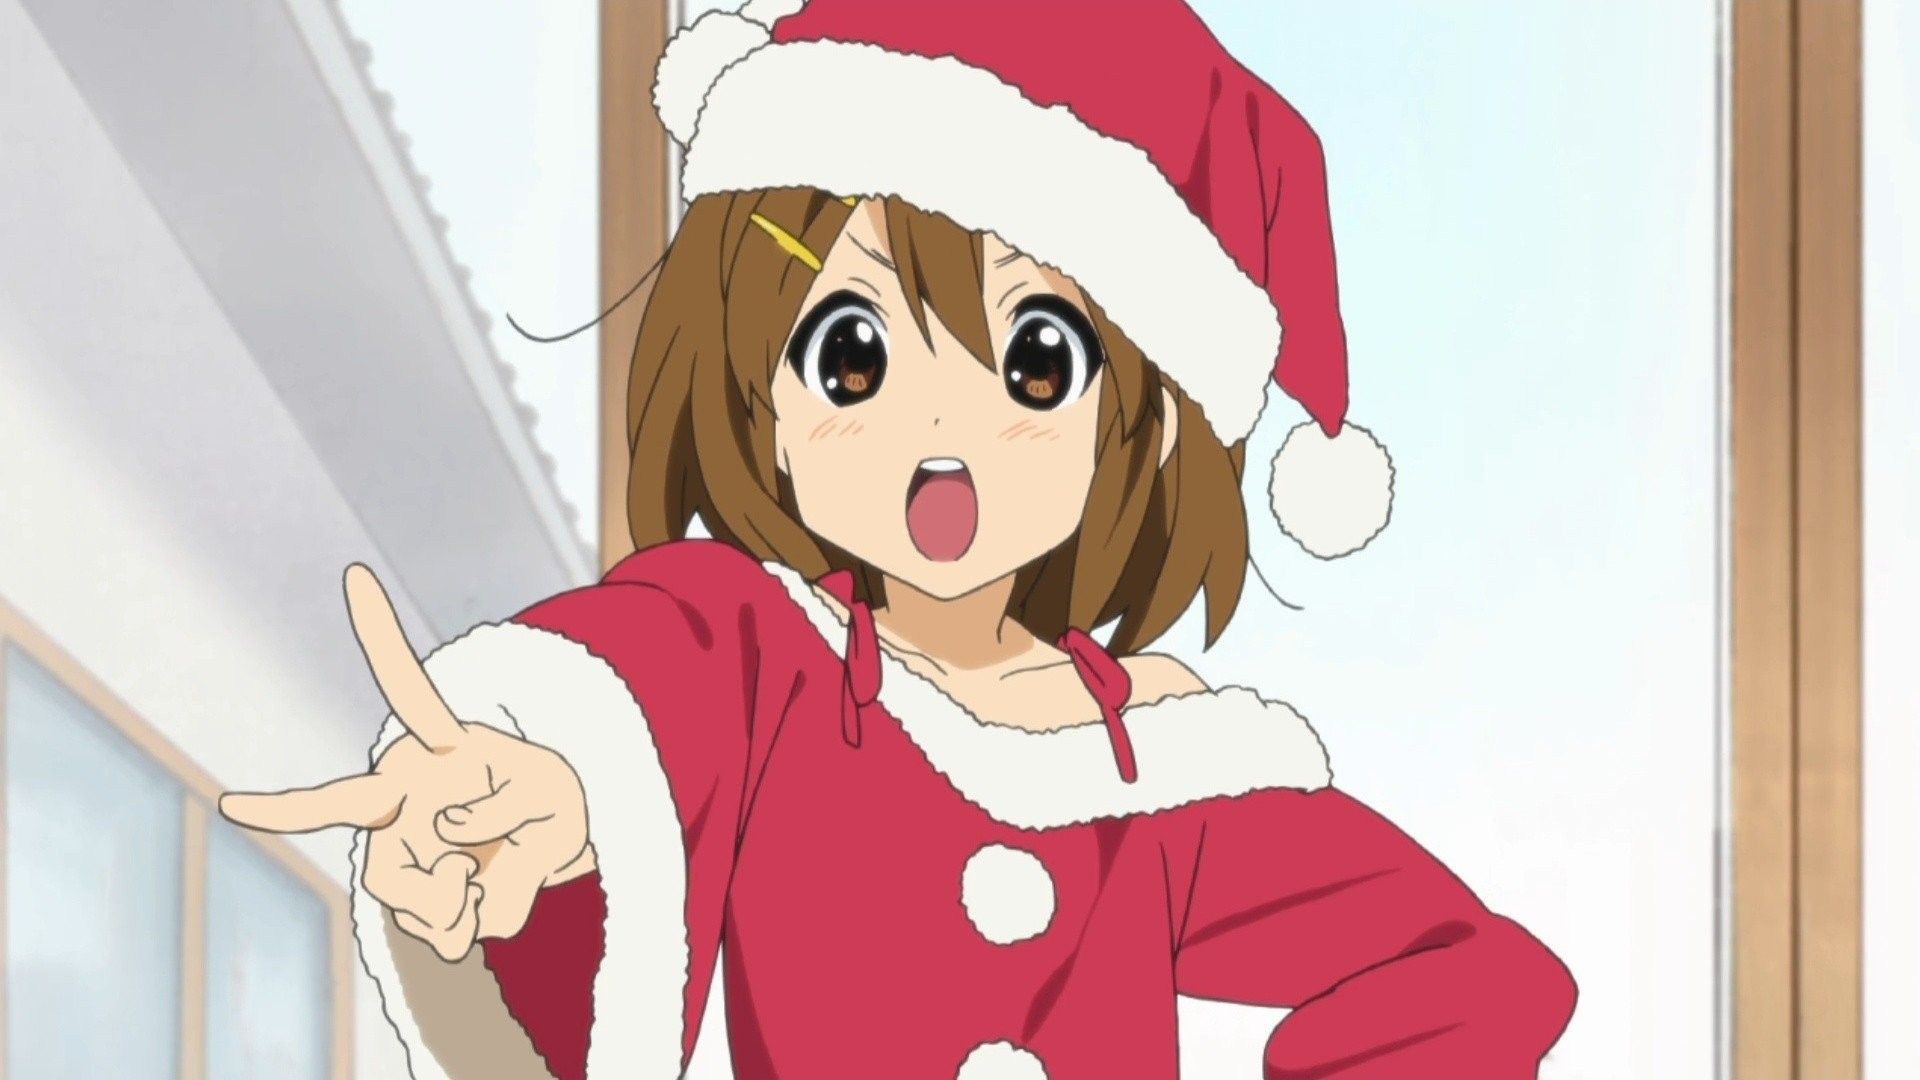 Christmas Anime Aesthetic Wallpaper Free Christmas Anime Aesthetic Background